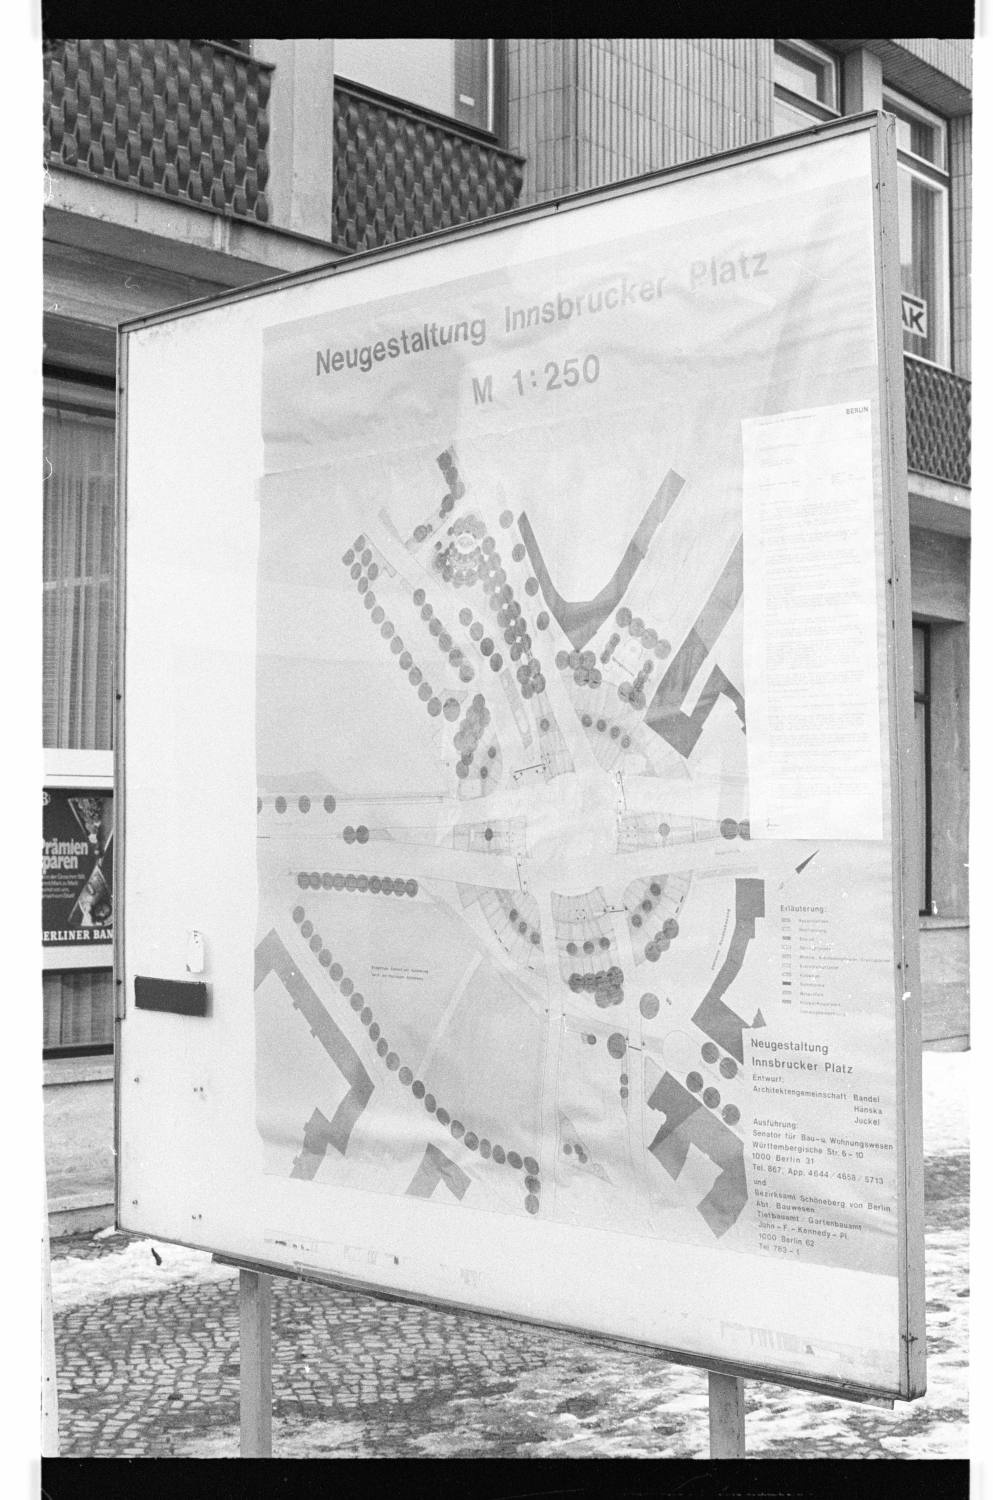 Kleinbildnegative: Informationstafel, Neugestaltung Innsbrucker Platz, 1979 (Museen Tempelhof-Schöneberg/Jürgen Henschel RR-F)